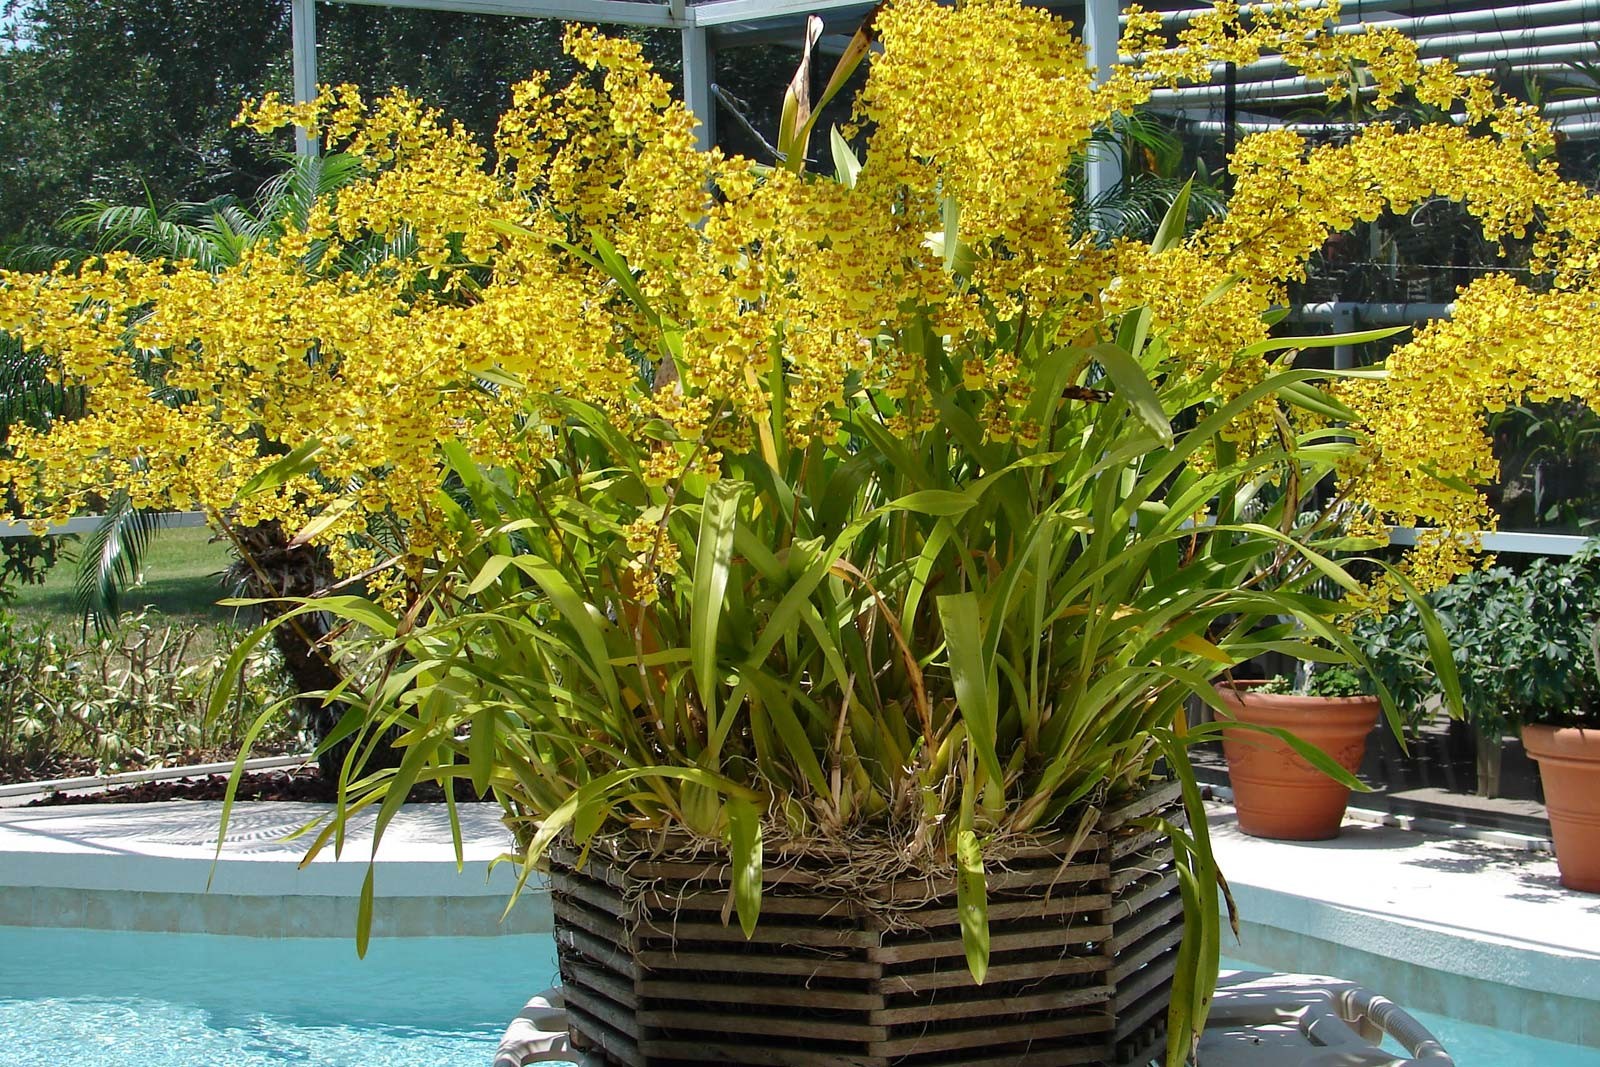 Oncidum plant